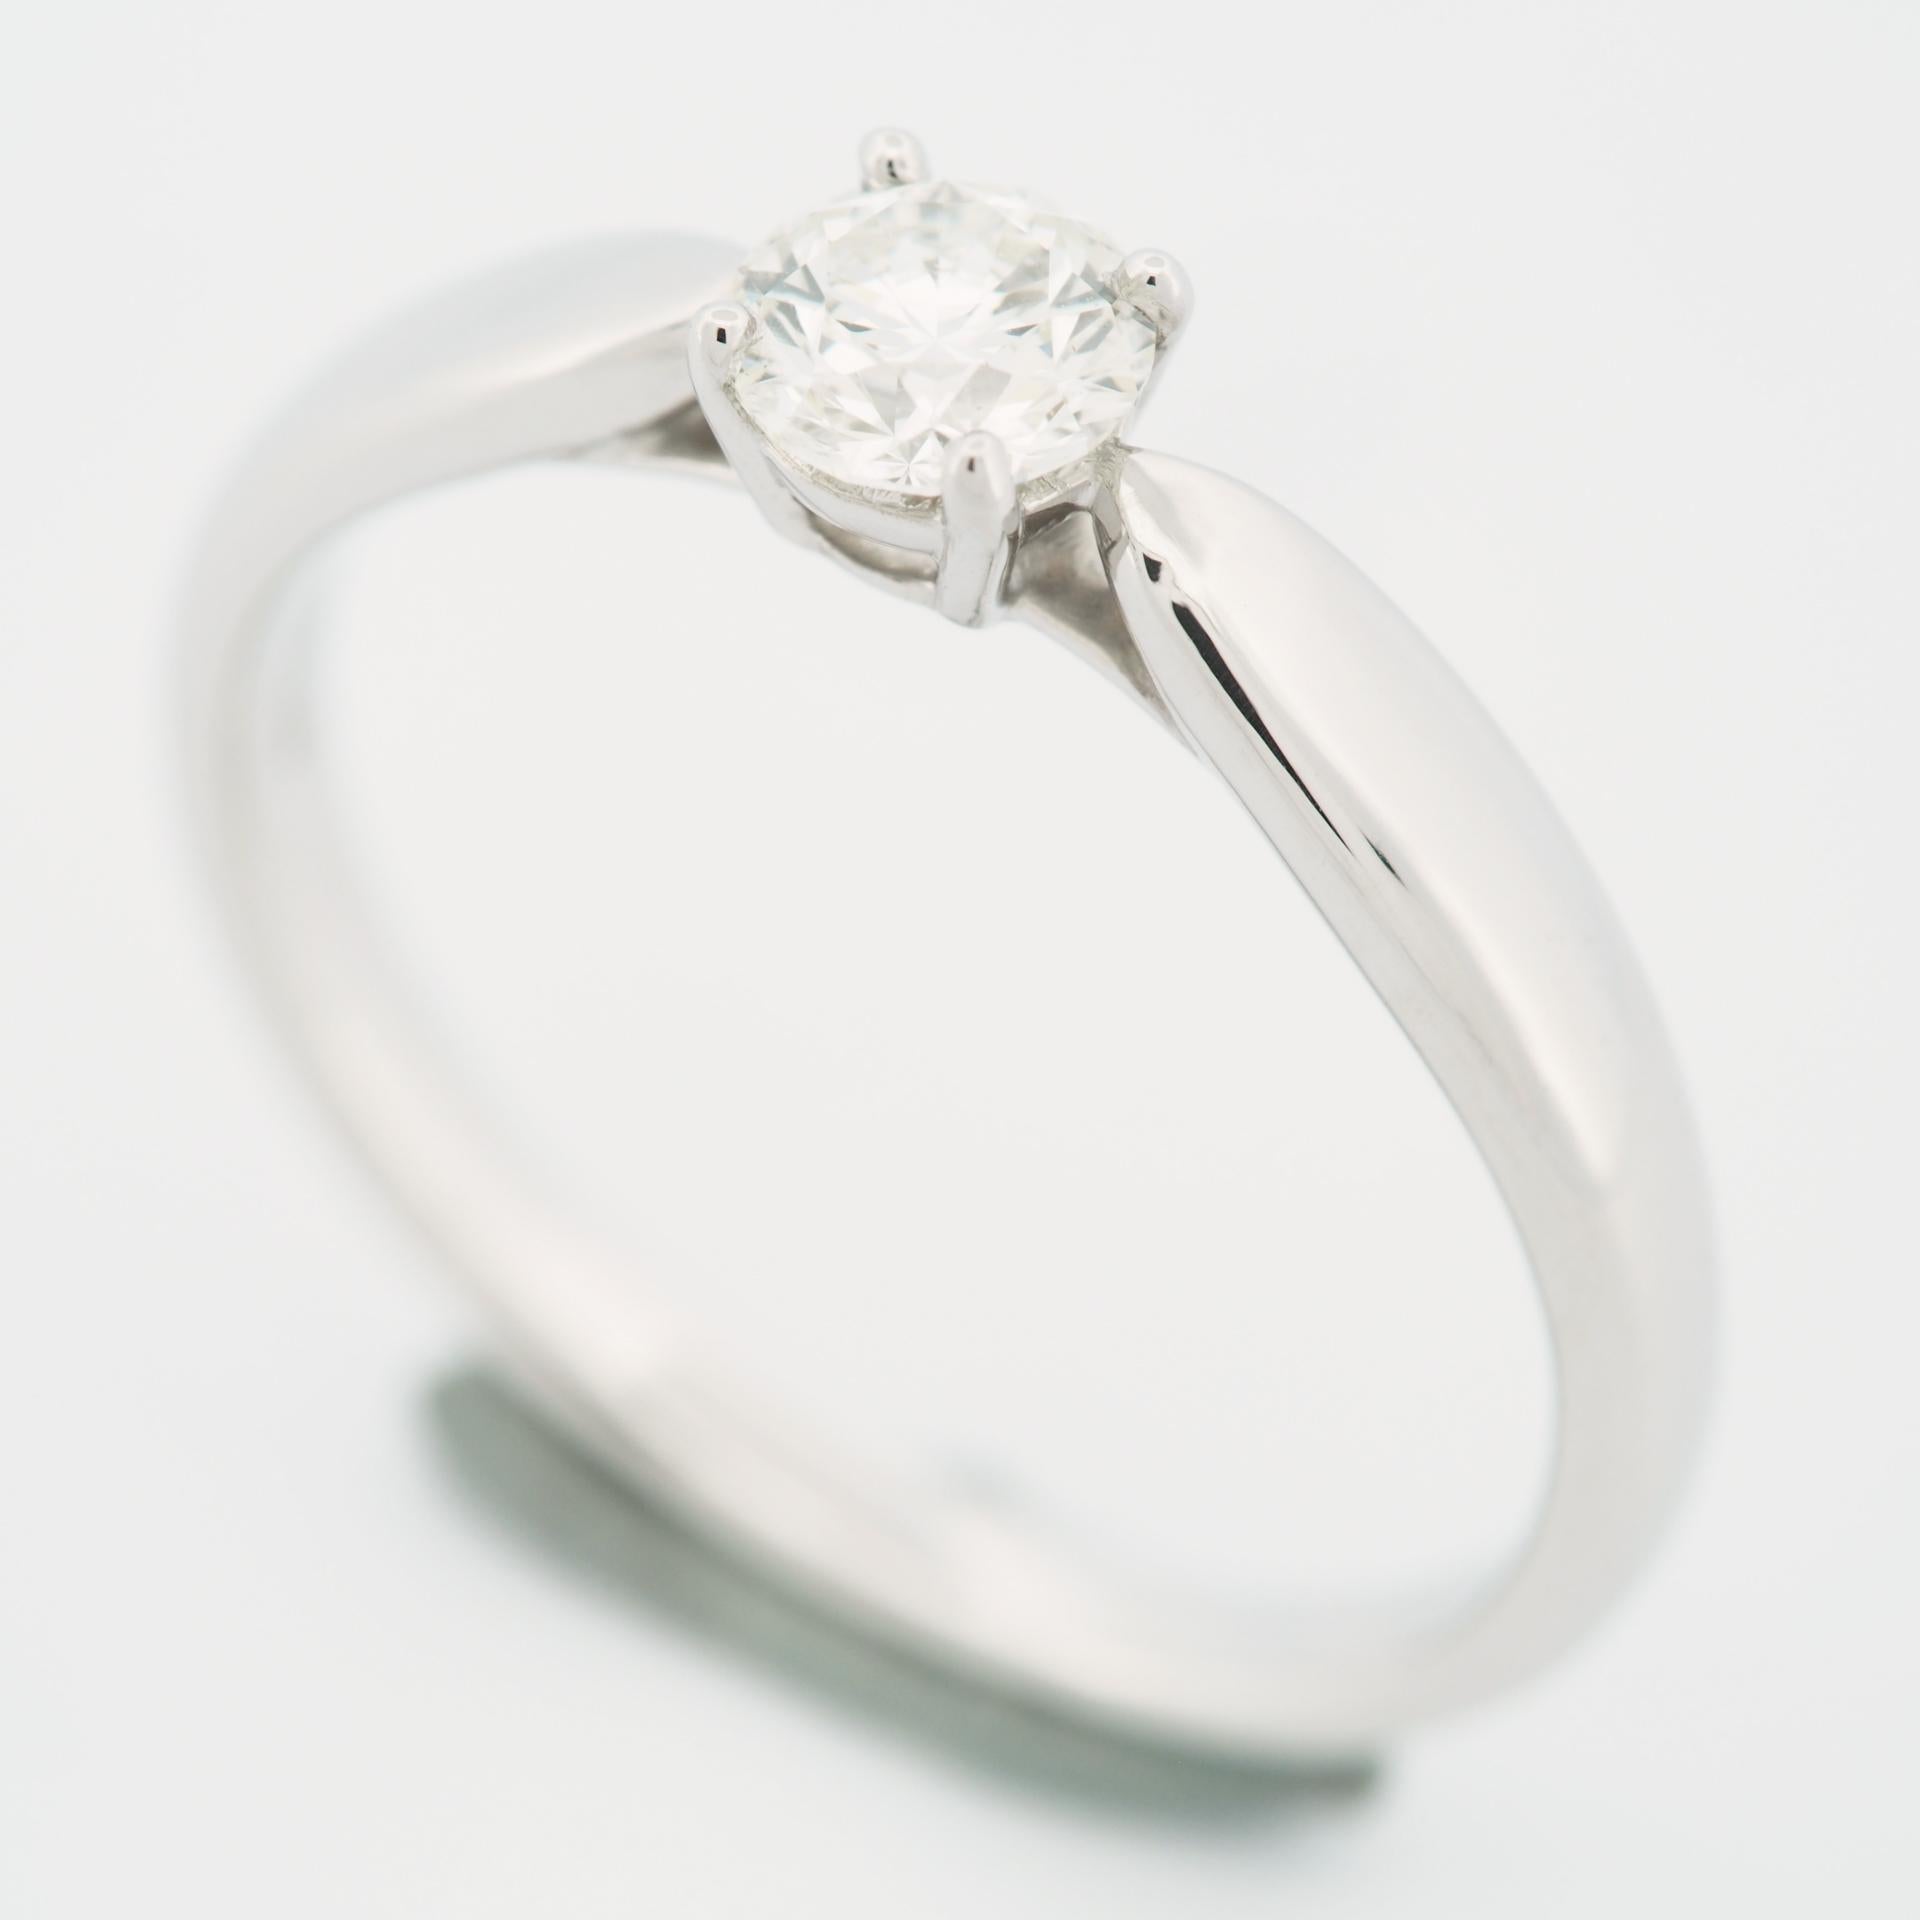 Item: Tiffany Harmony Solitaire Diamond Ring 
Stones: Diamond / 0.34ct
Color: I
Clarity: VS1
Polish: Excellent
Symmetry: Excellent
Fluorescence: None
Metal: Platinum 950
Ring Size: US SIZE 5.75 UK SIZE K 3/4
Internal Diameter: 16.30 mm
Measurements: